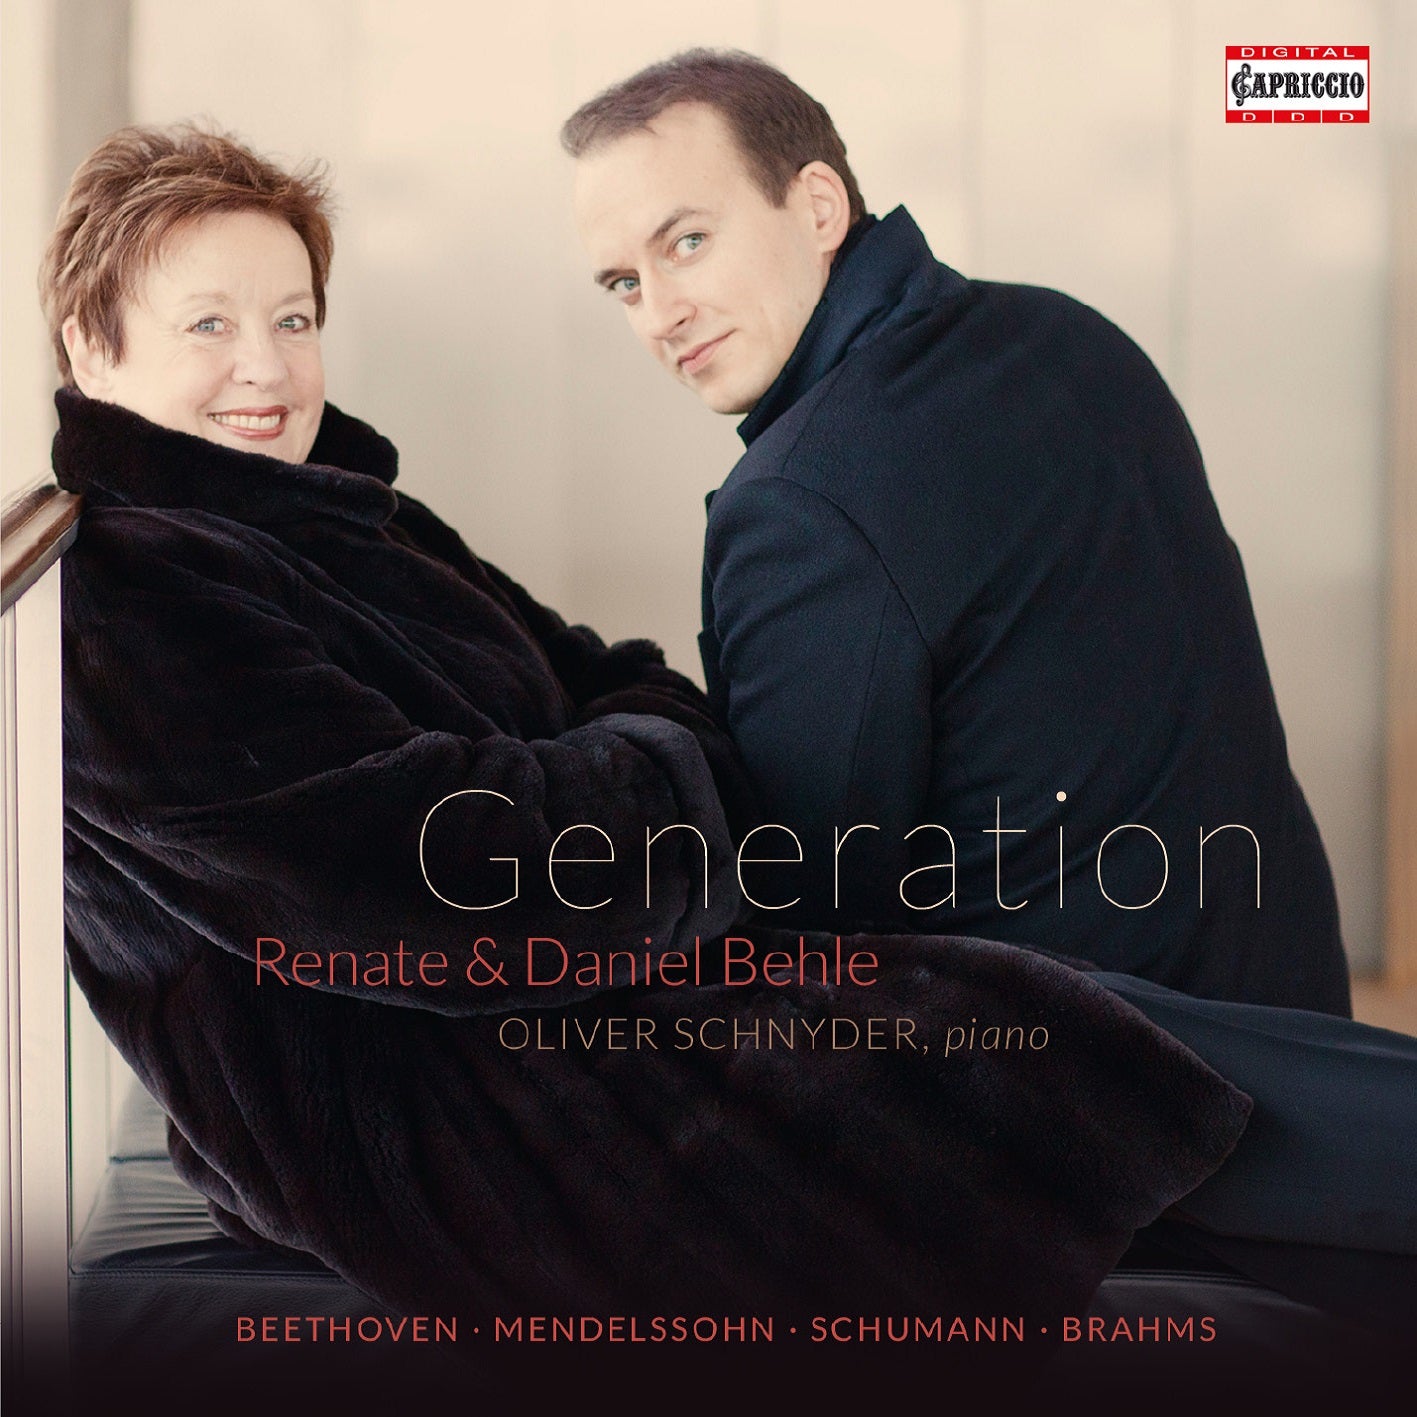 Beethoven, Mendelssohn, Schumann, Brahms: Generation / R. & D. Behle, Schnyder